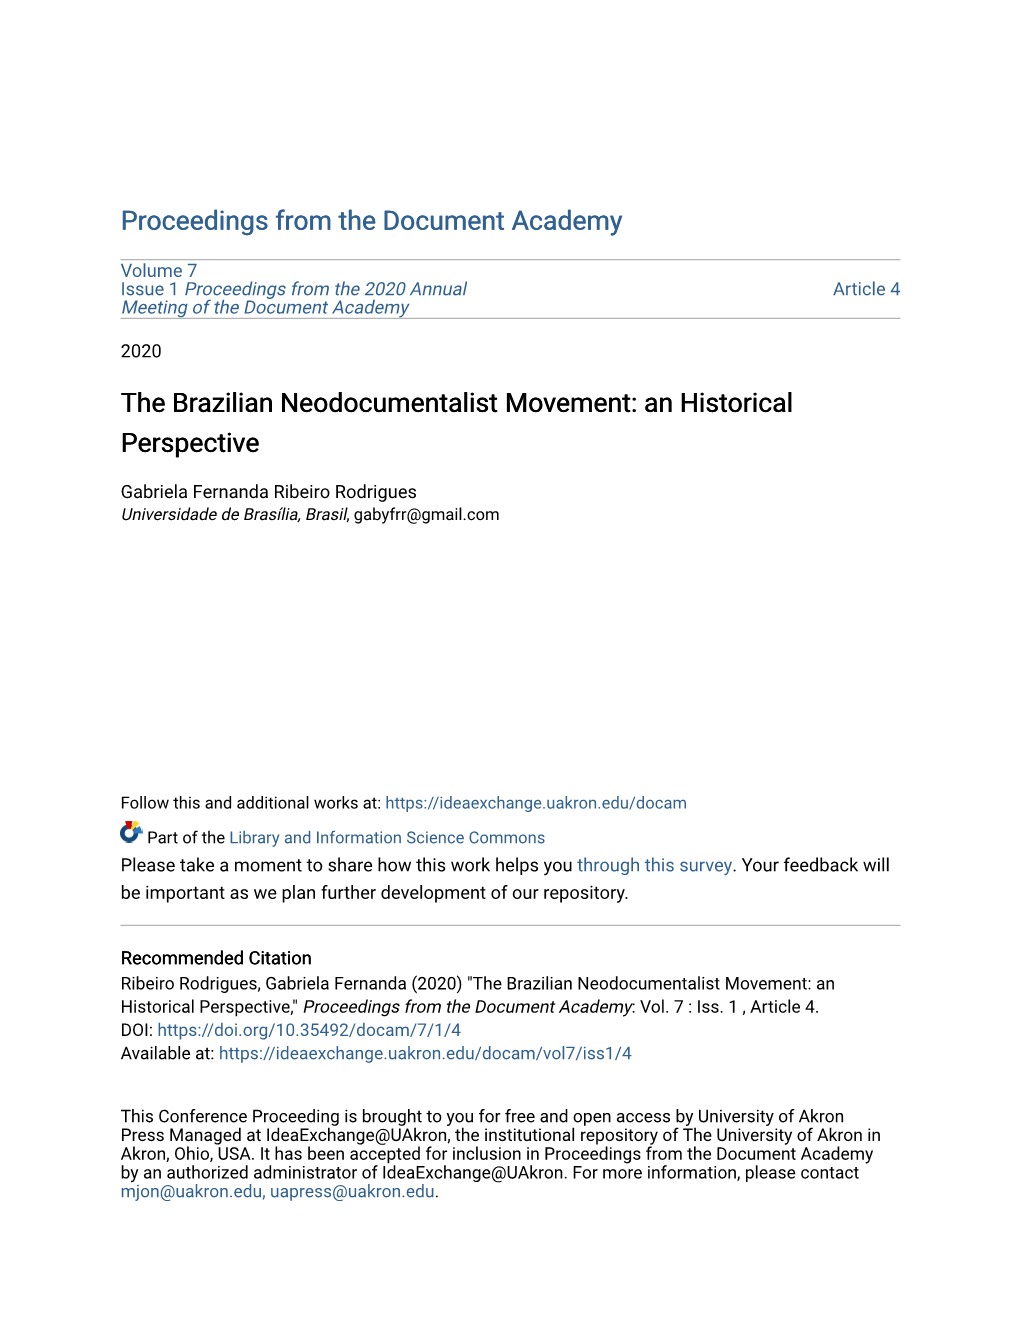 The Brazilian Neodocumentalist Movement: an Historical Perspective